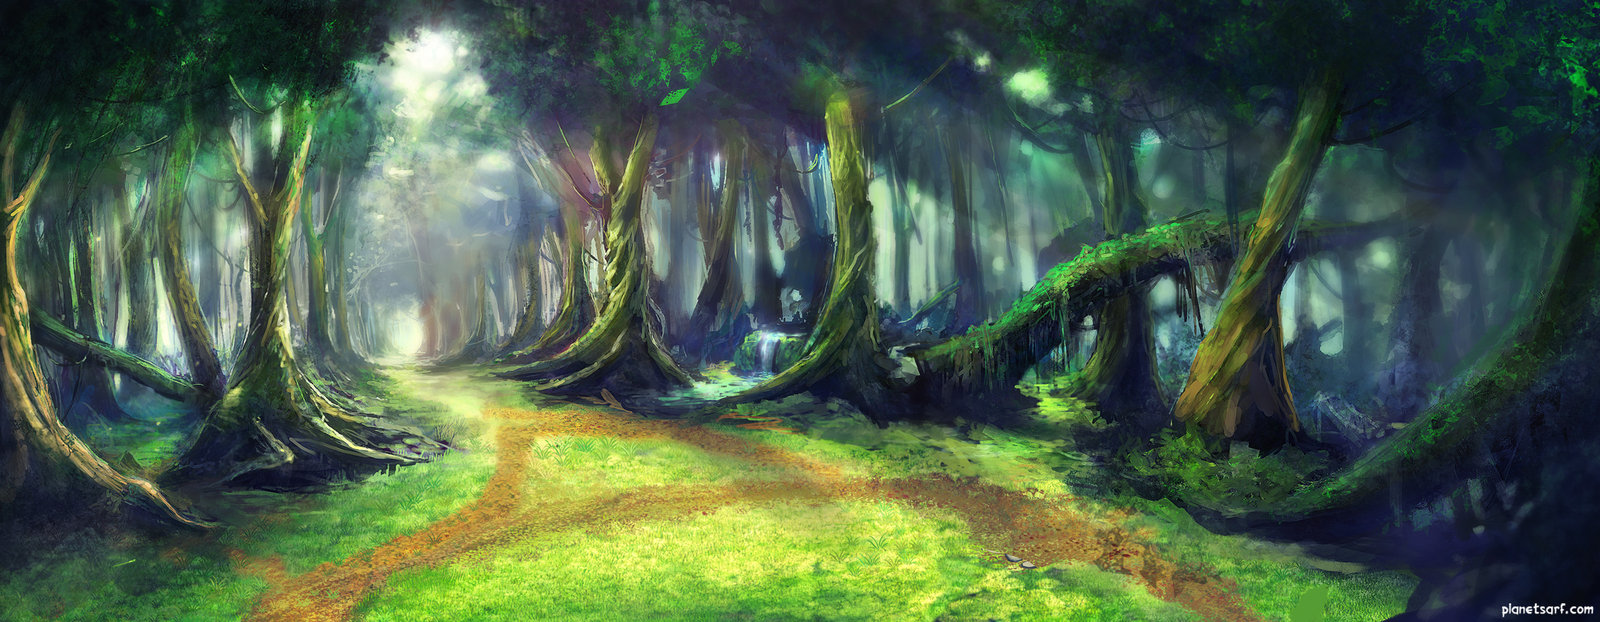 sarf jungle background by abigbat designs interfaces game development